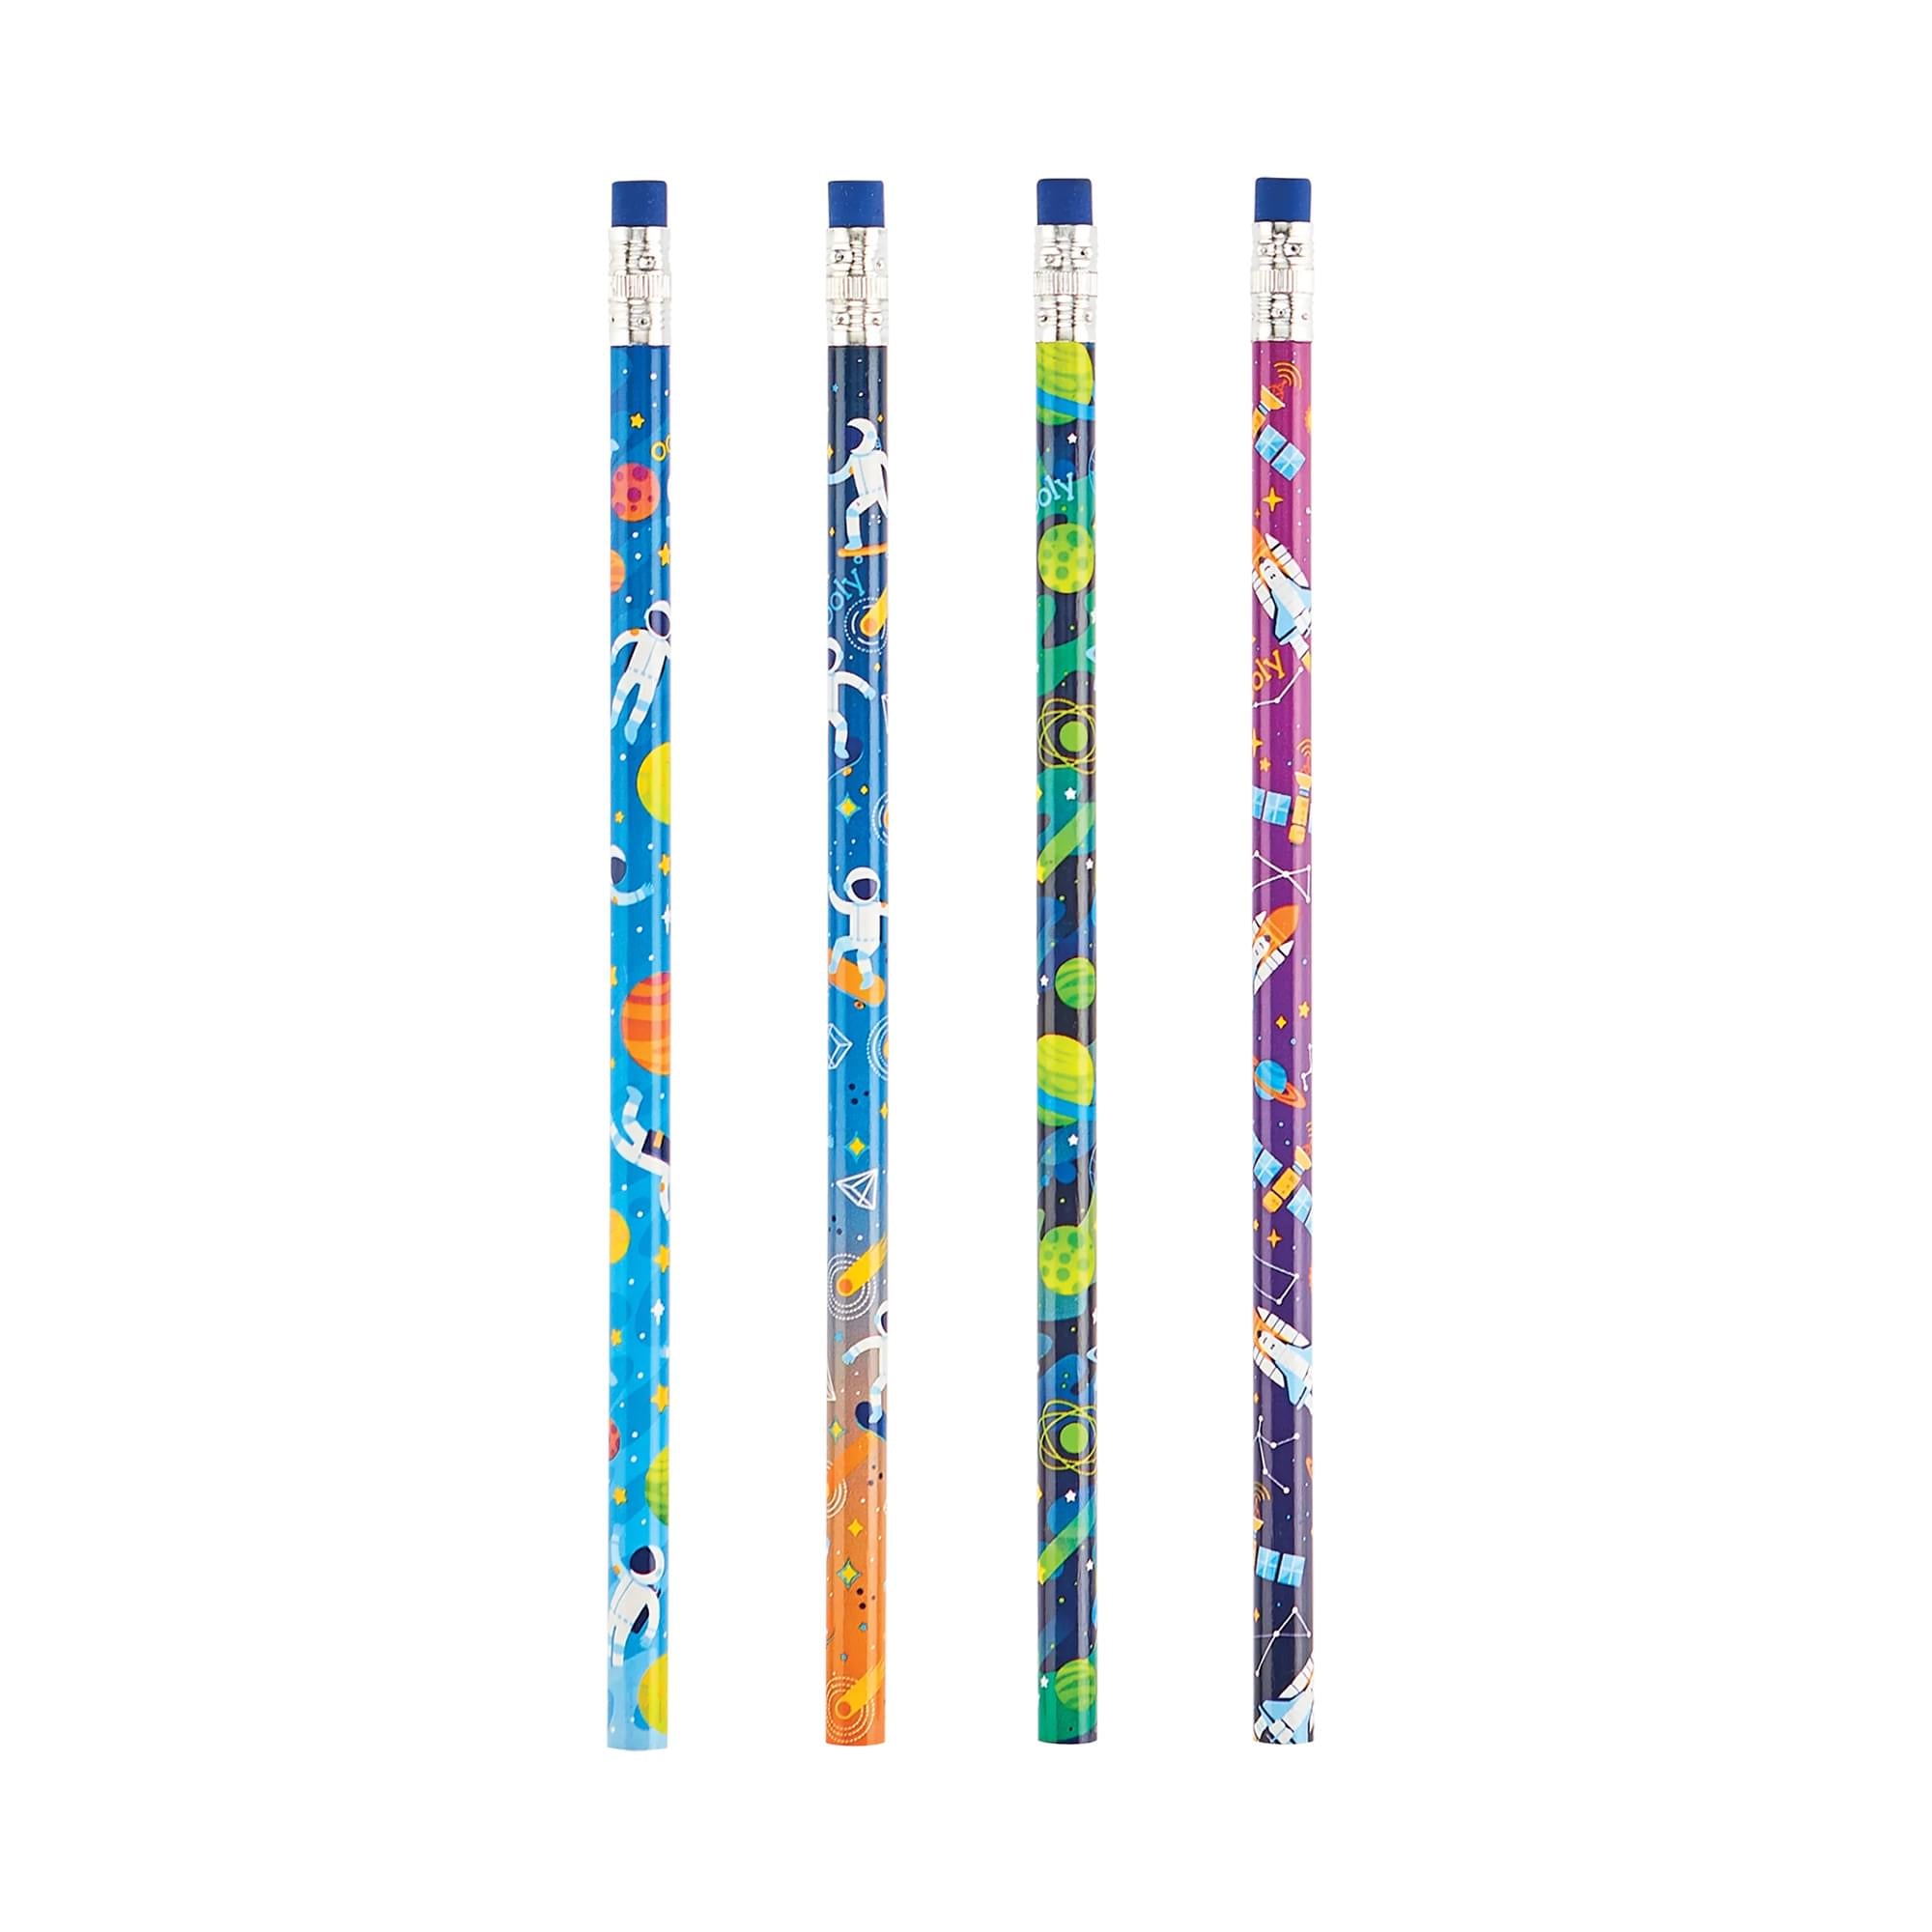 Astronaut Graphite Pencils - Set of 12 - Ooly